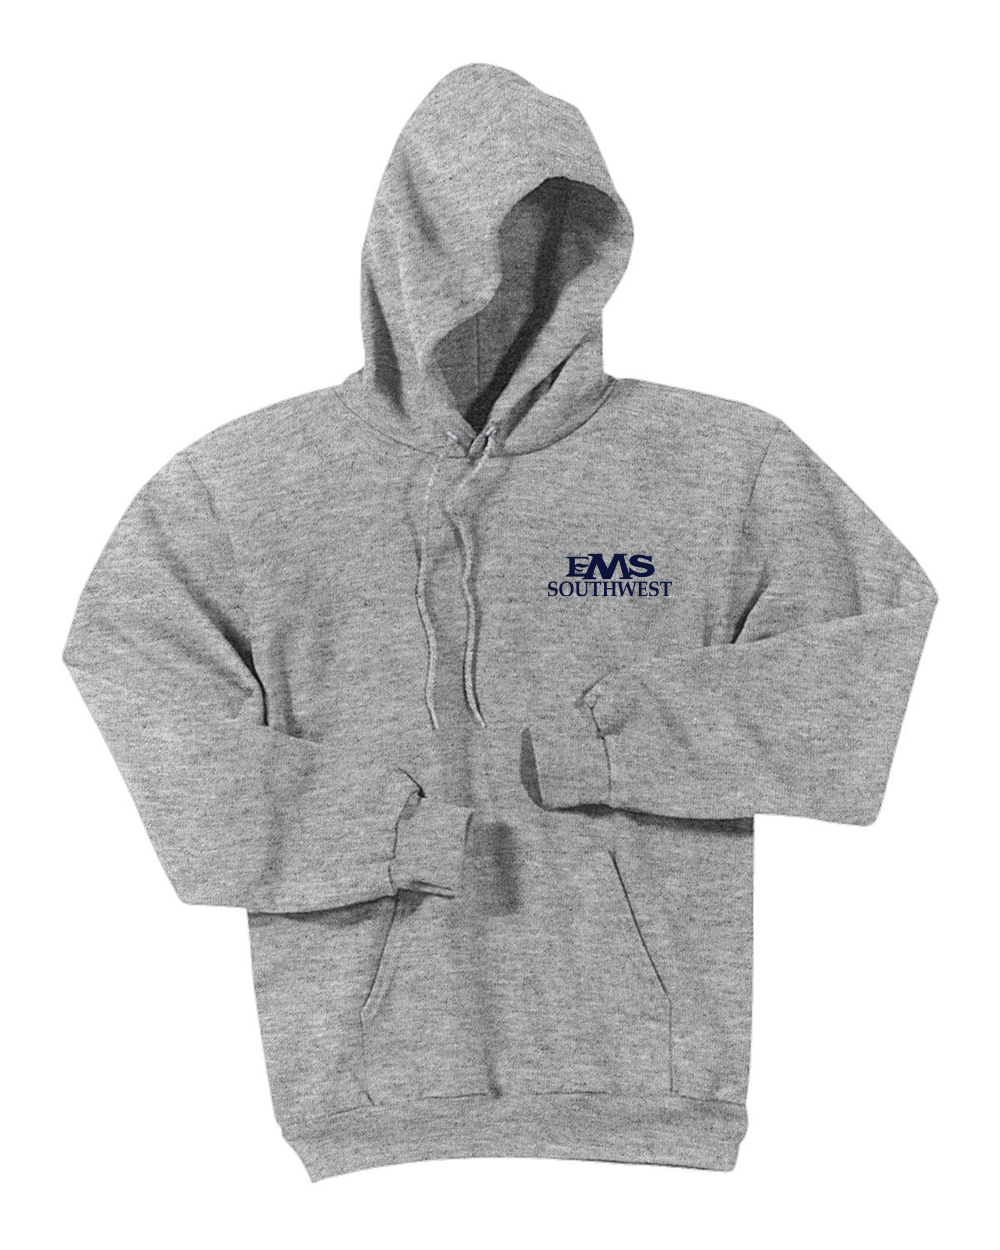 EMS Southwest - Port & Company Essential Fleece Pullover Hooded Sweatshirt